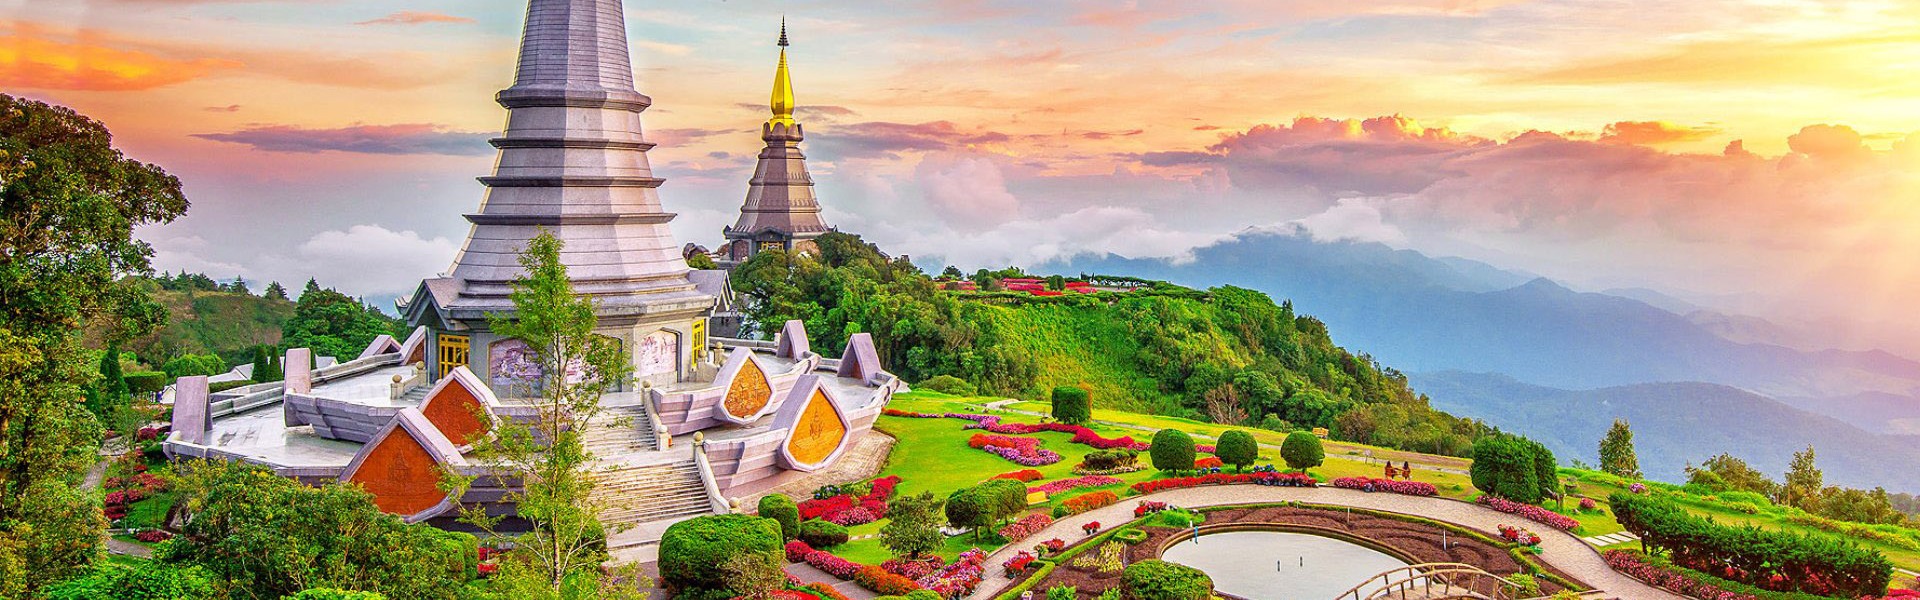 Thailand Chiang Mai Amazing Photo